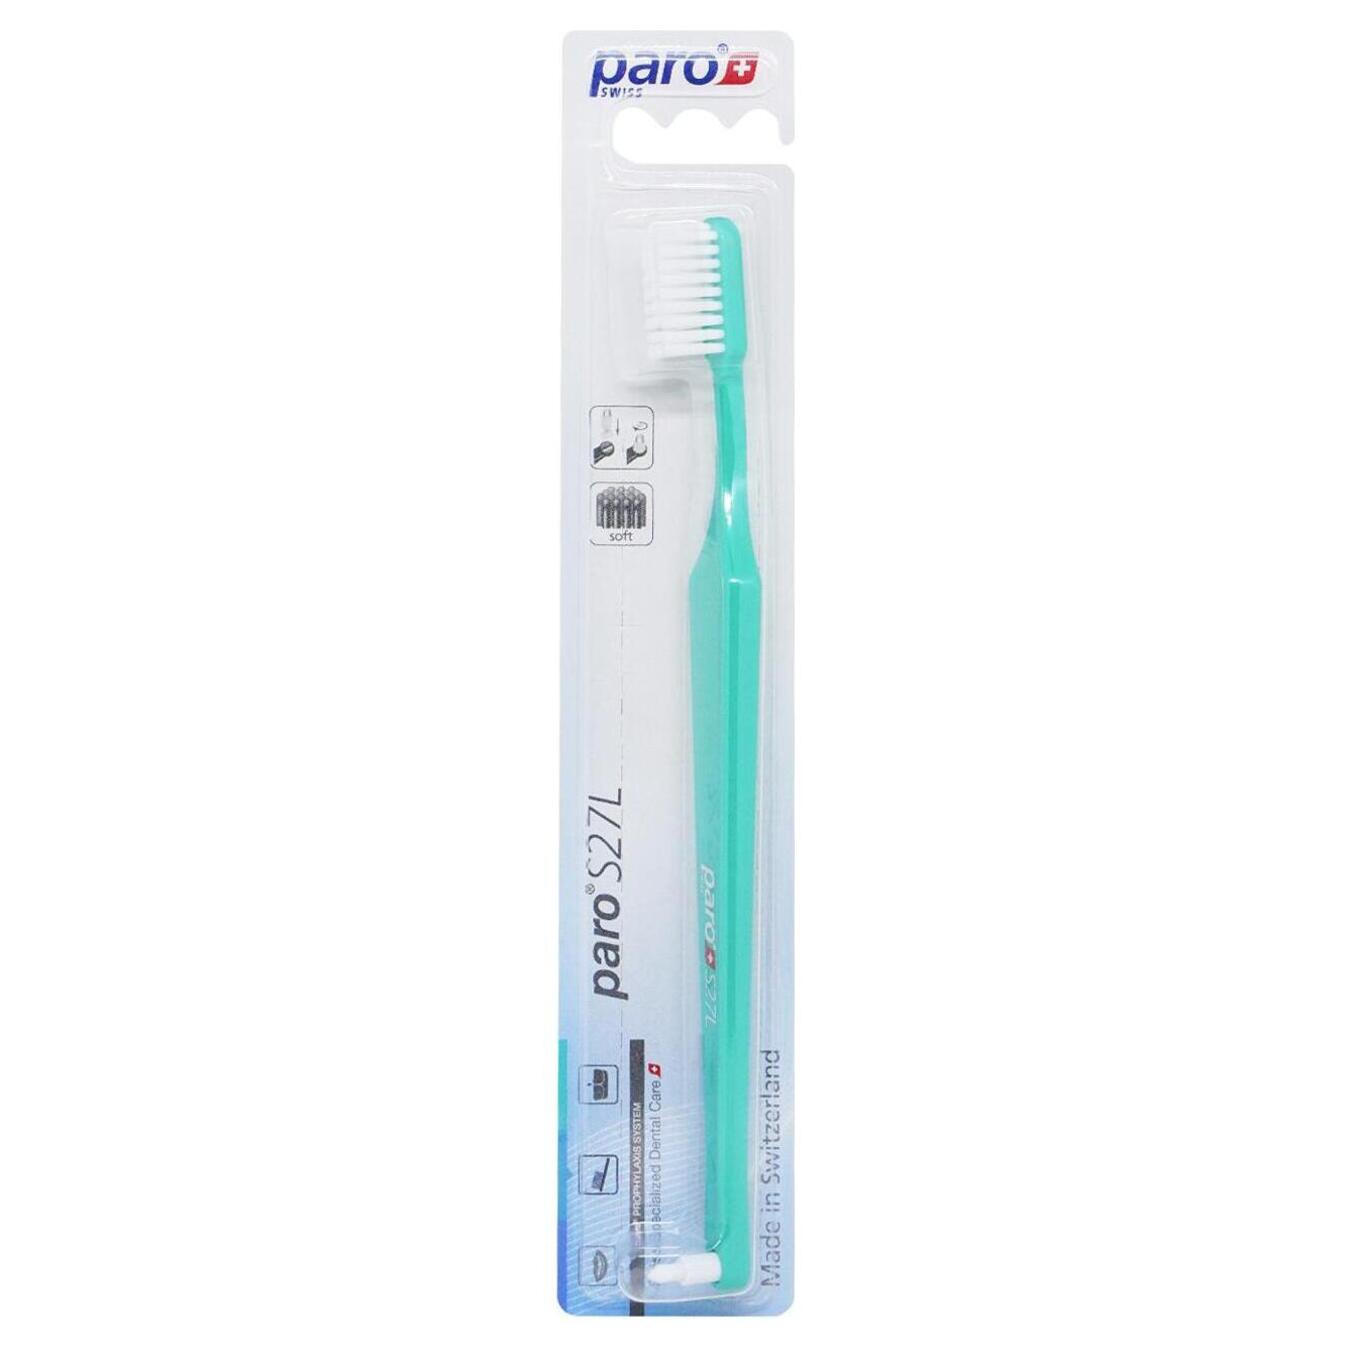 Toothbrush Paro soft 27 bundles of bristles 3 rows with monobundle nozzle S27L green